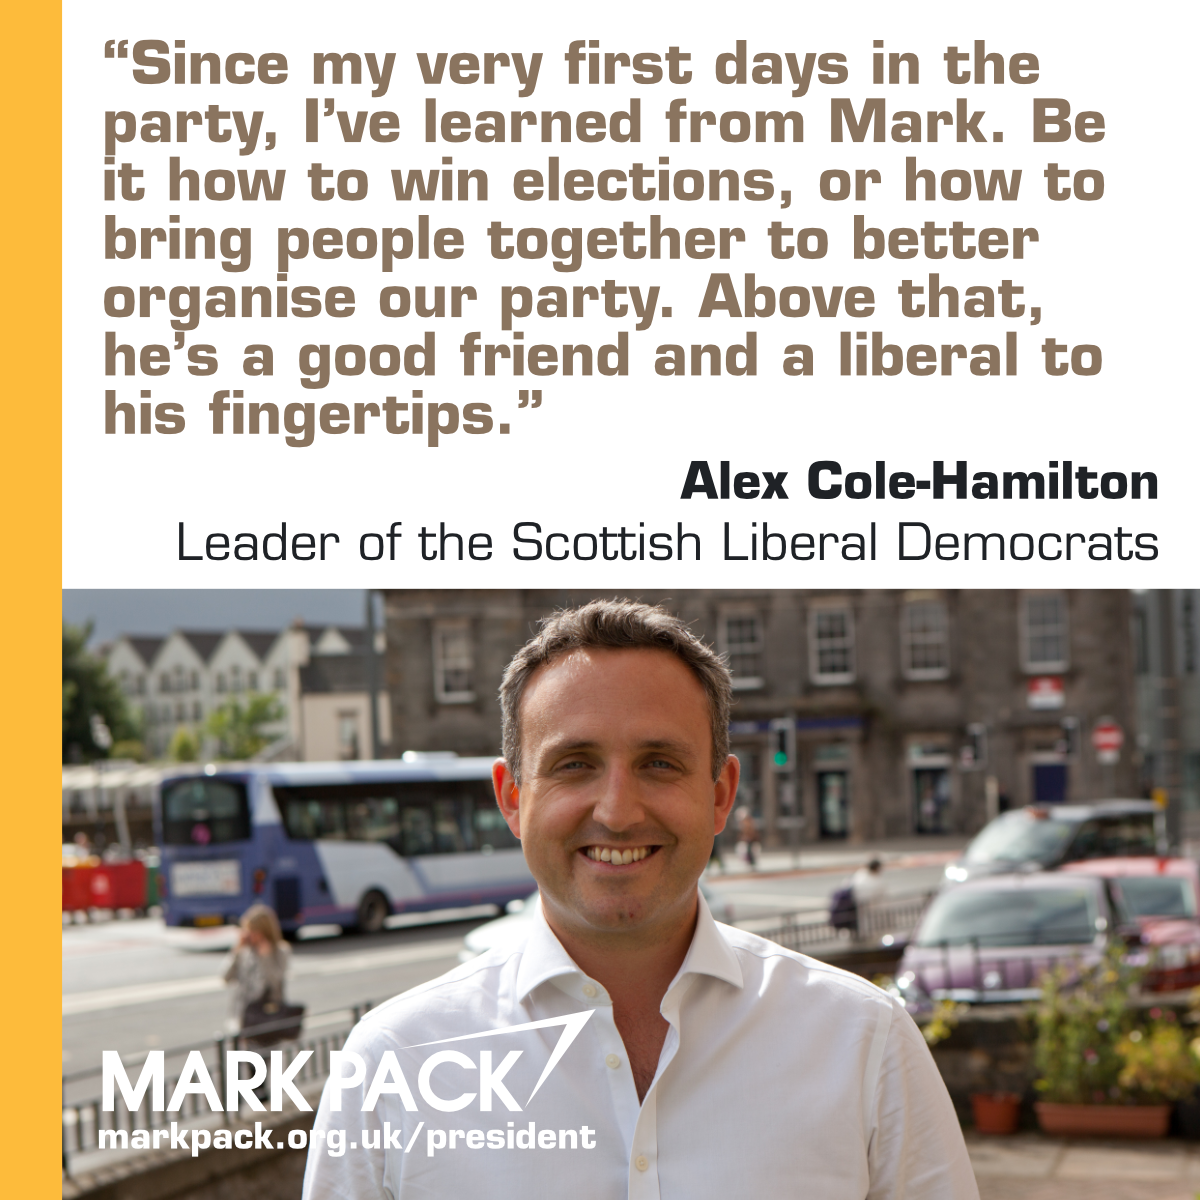 Alex Cole-Hamilton endorses Mark Pack